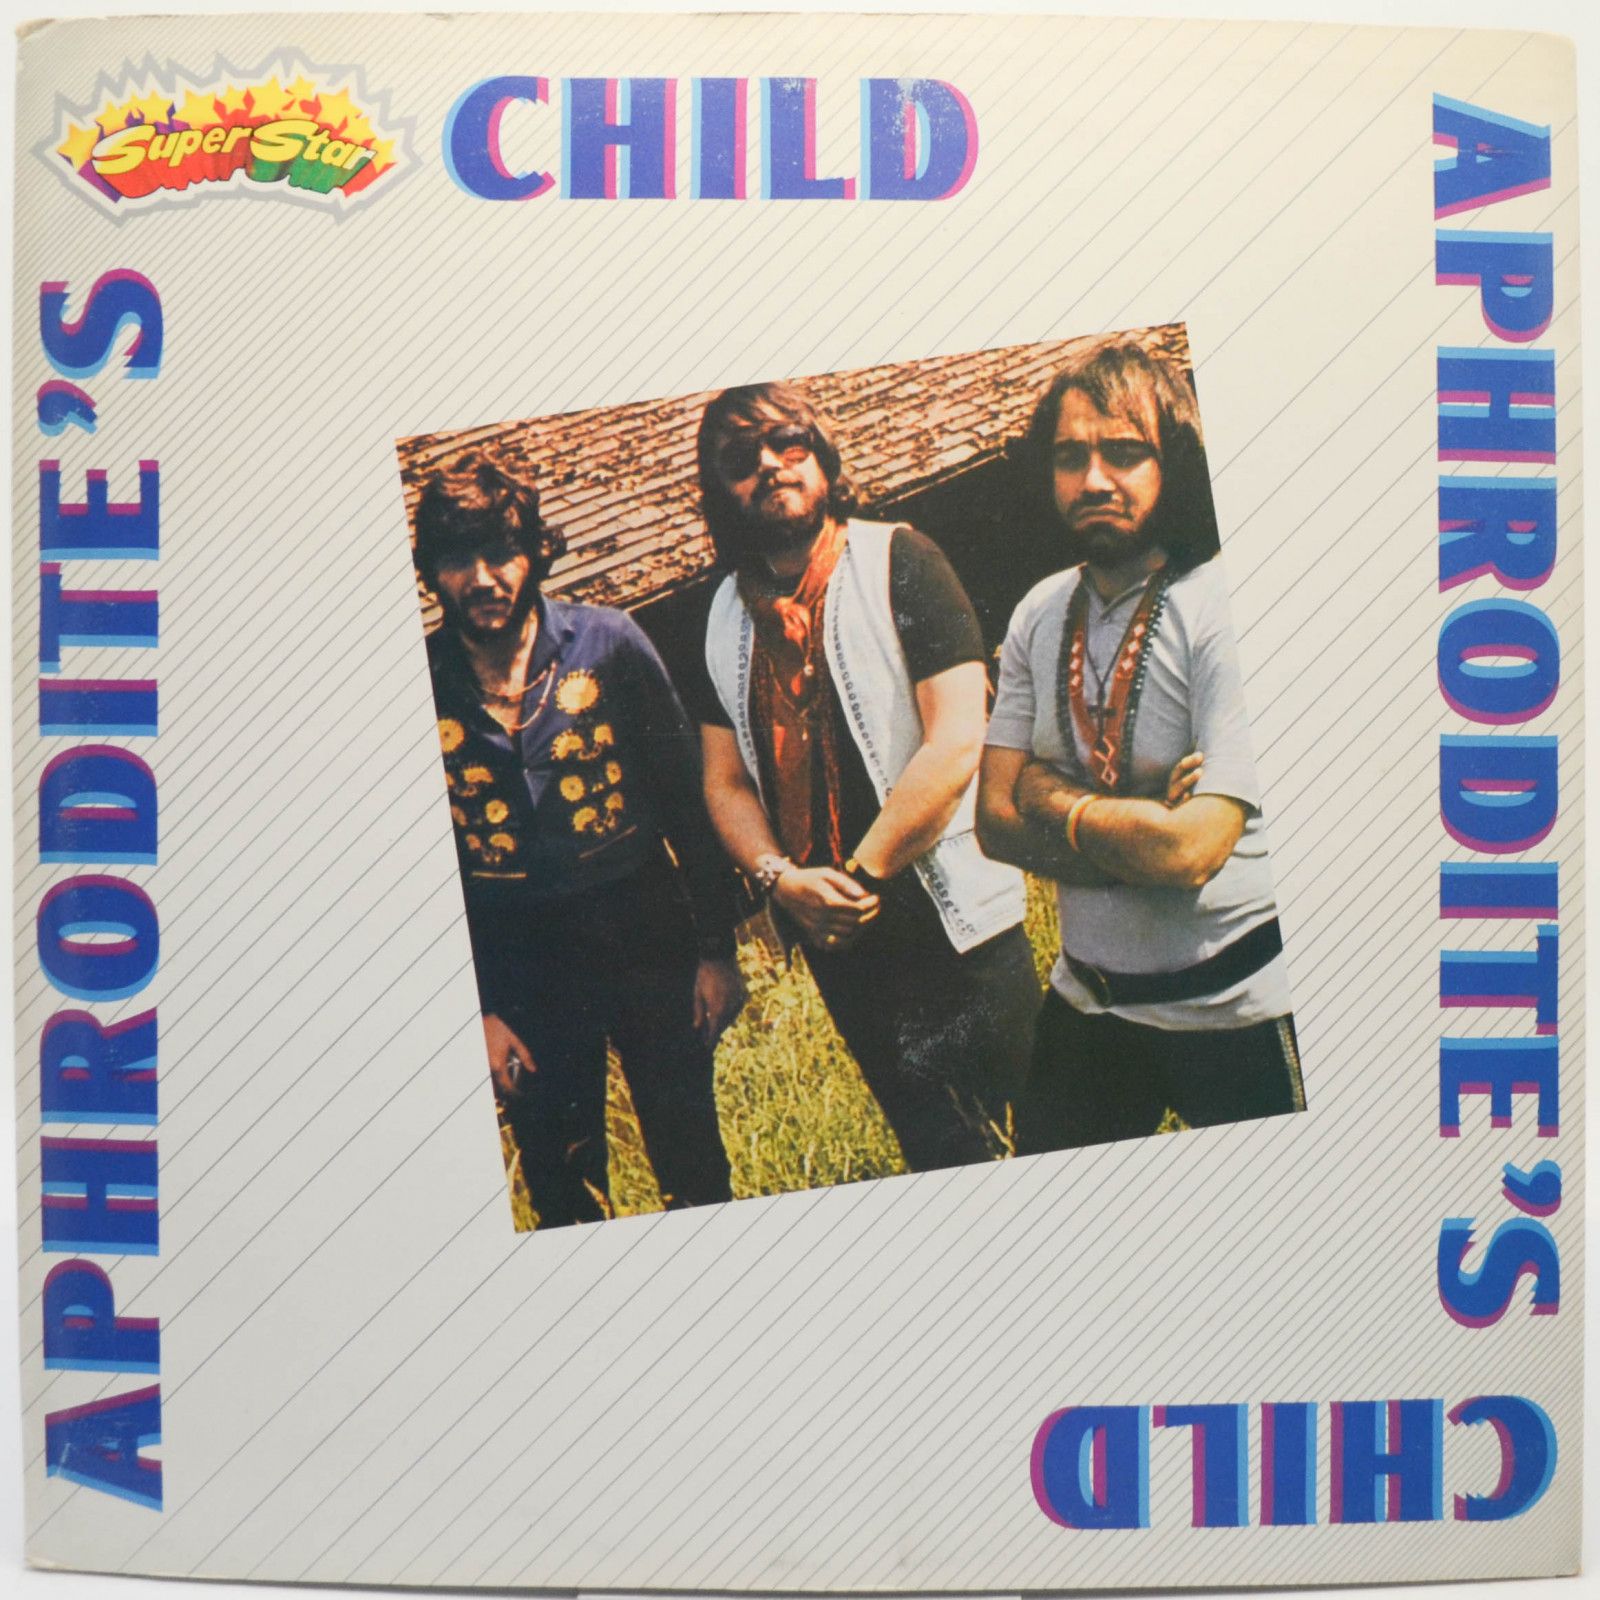 Aphrodite's Child — Aphrodite's Child (booklet), 1982